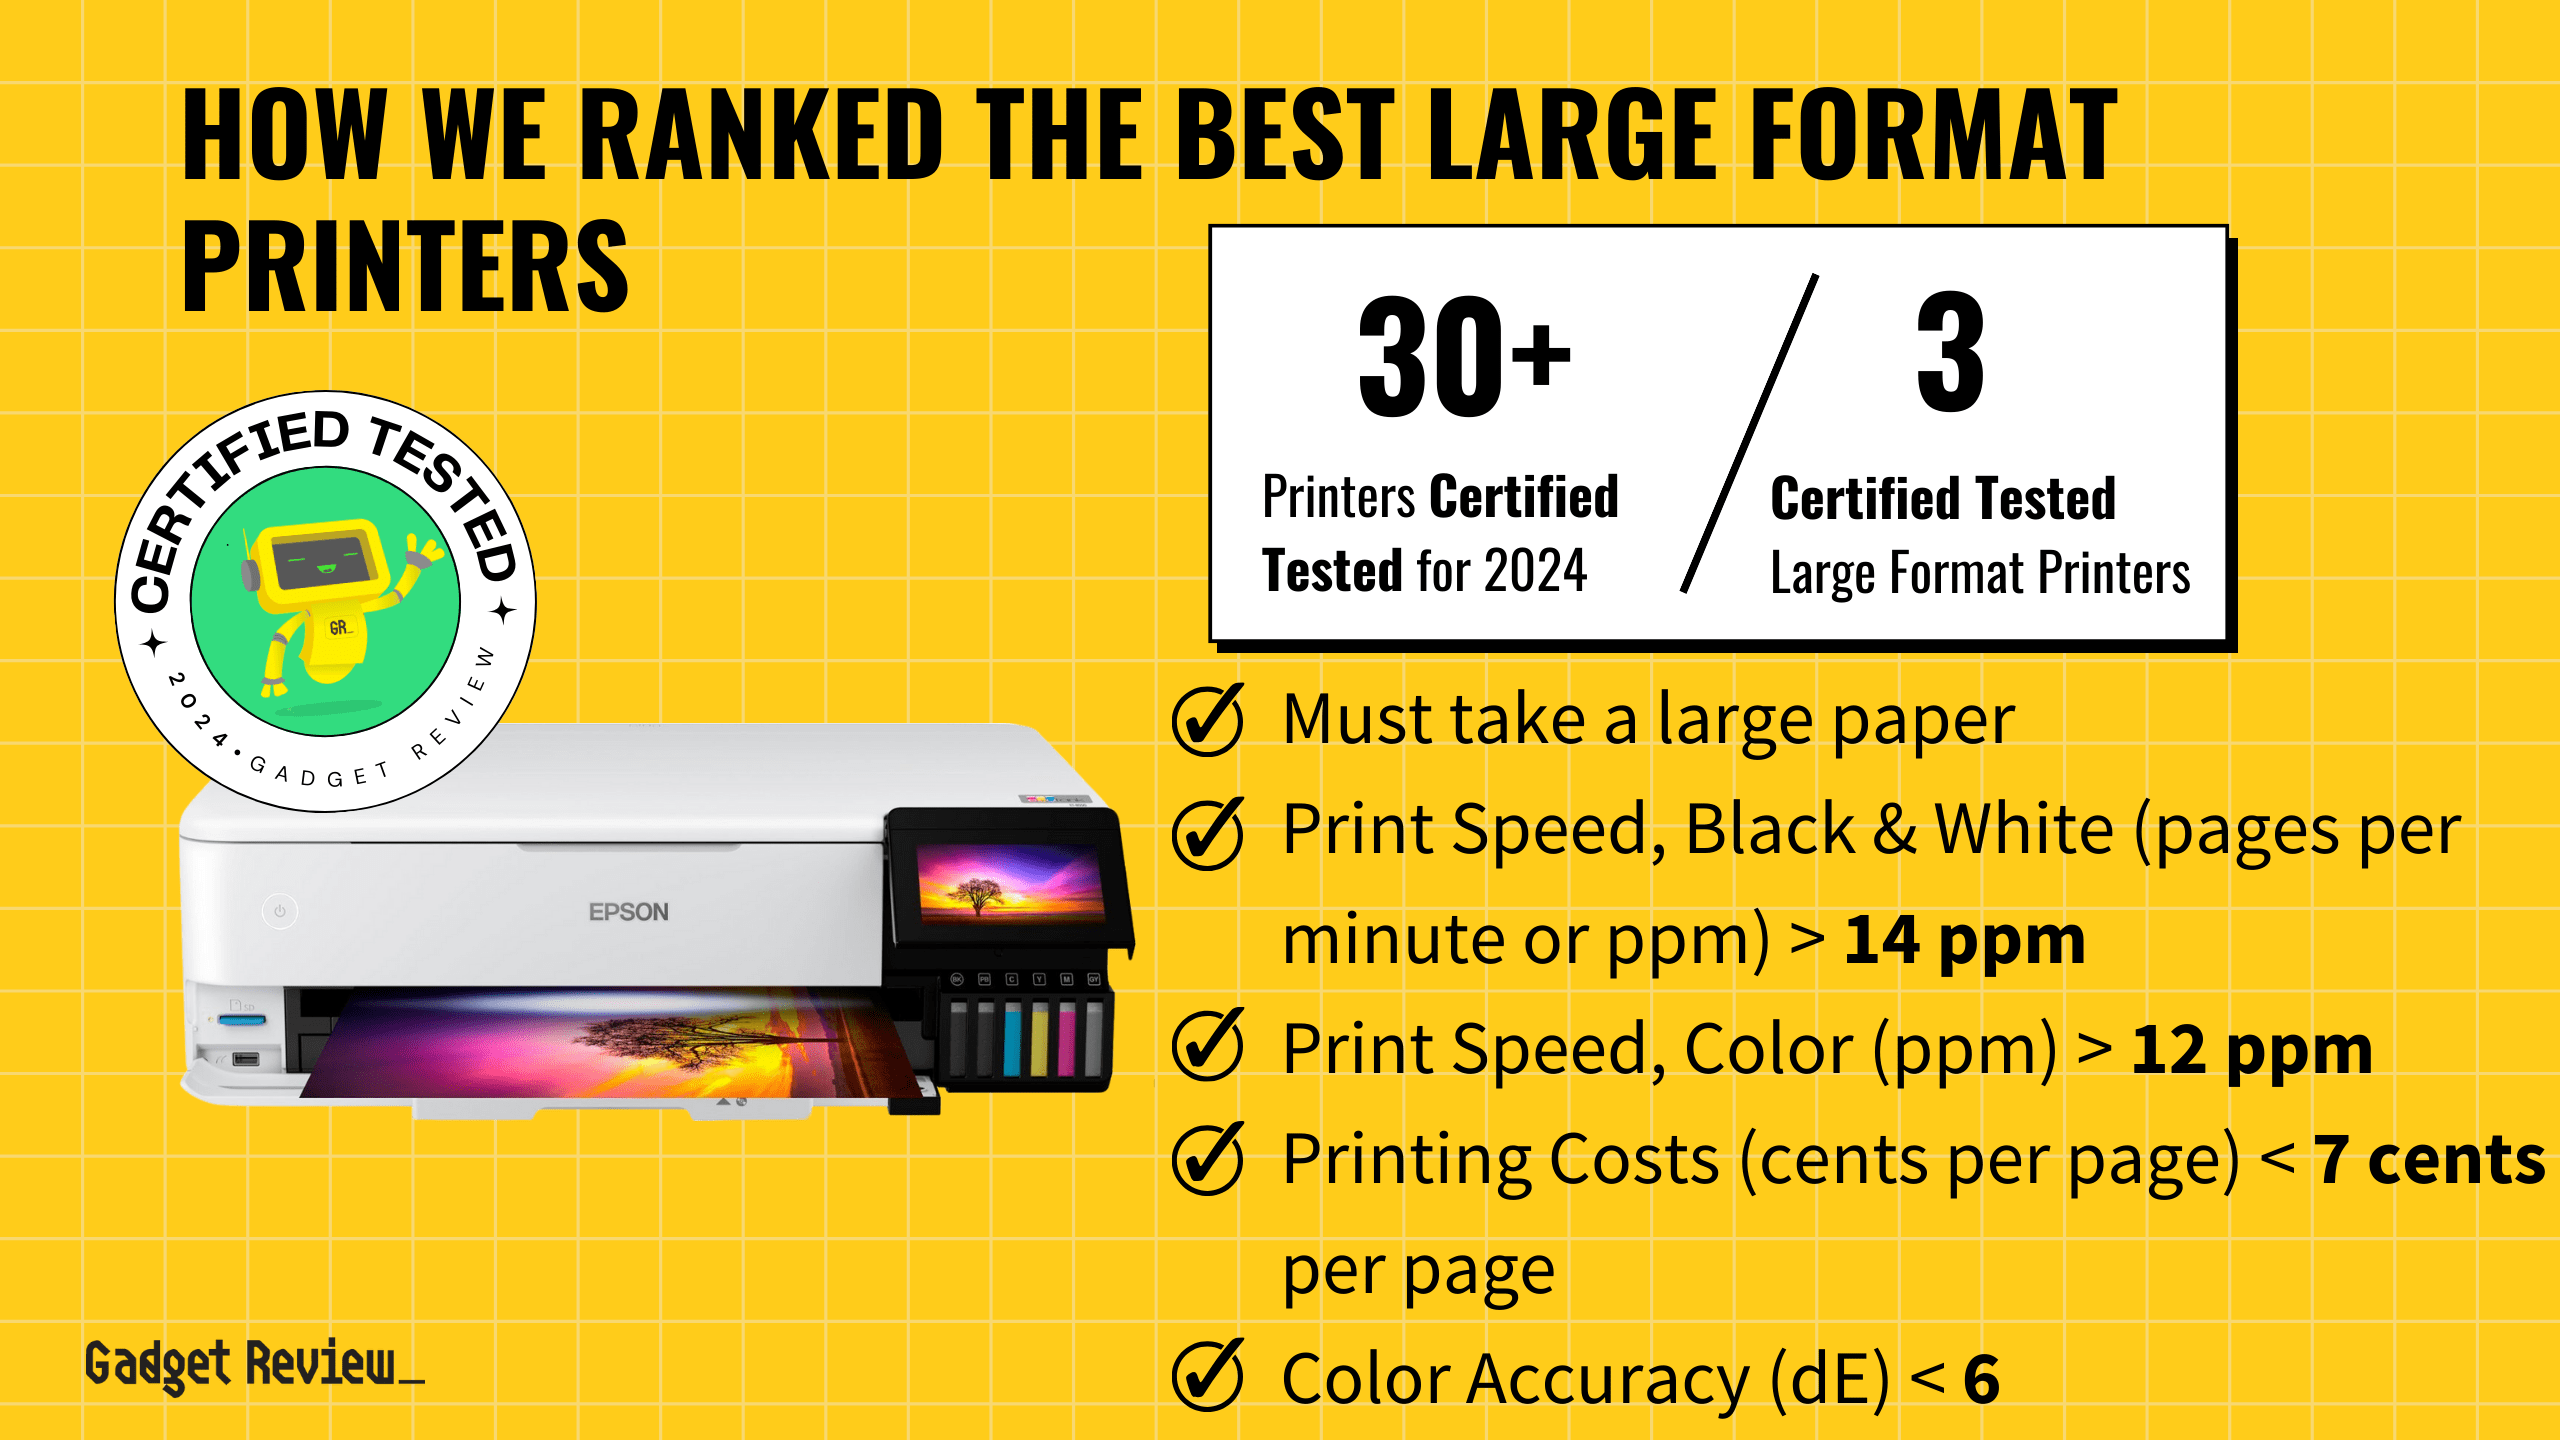 3 Top Large Format Printers of 2024 Ranked